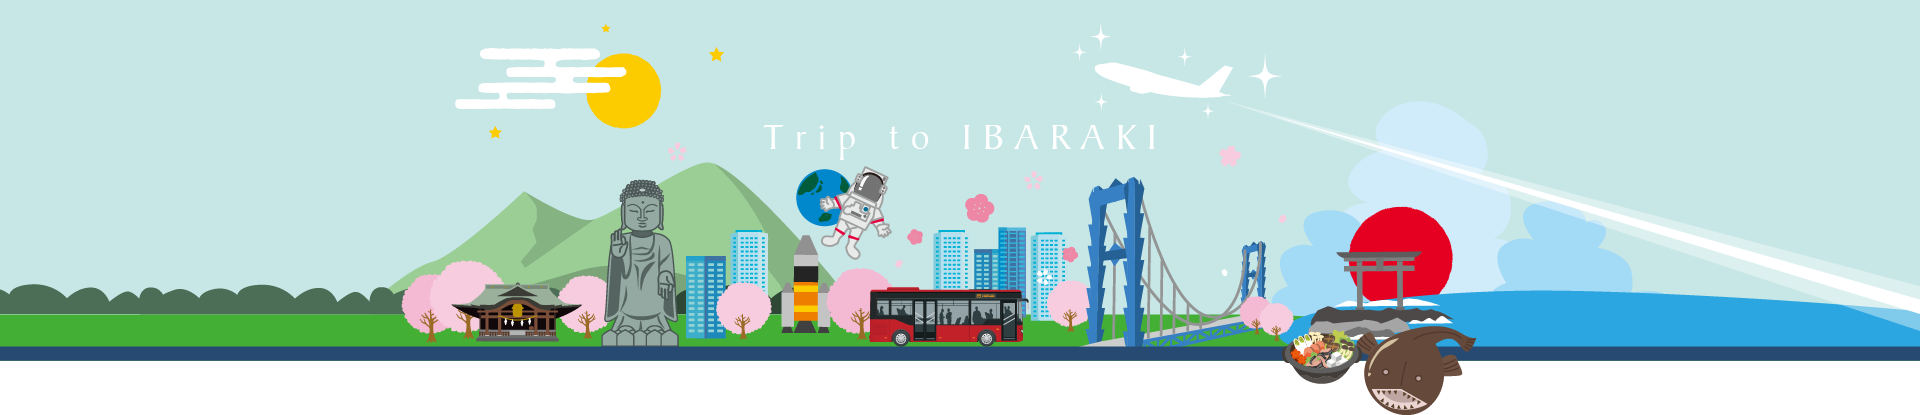 Trip to IBARAKI